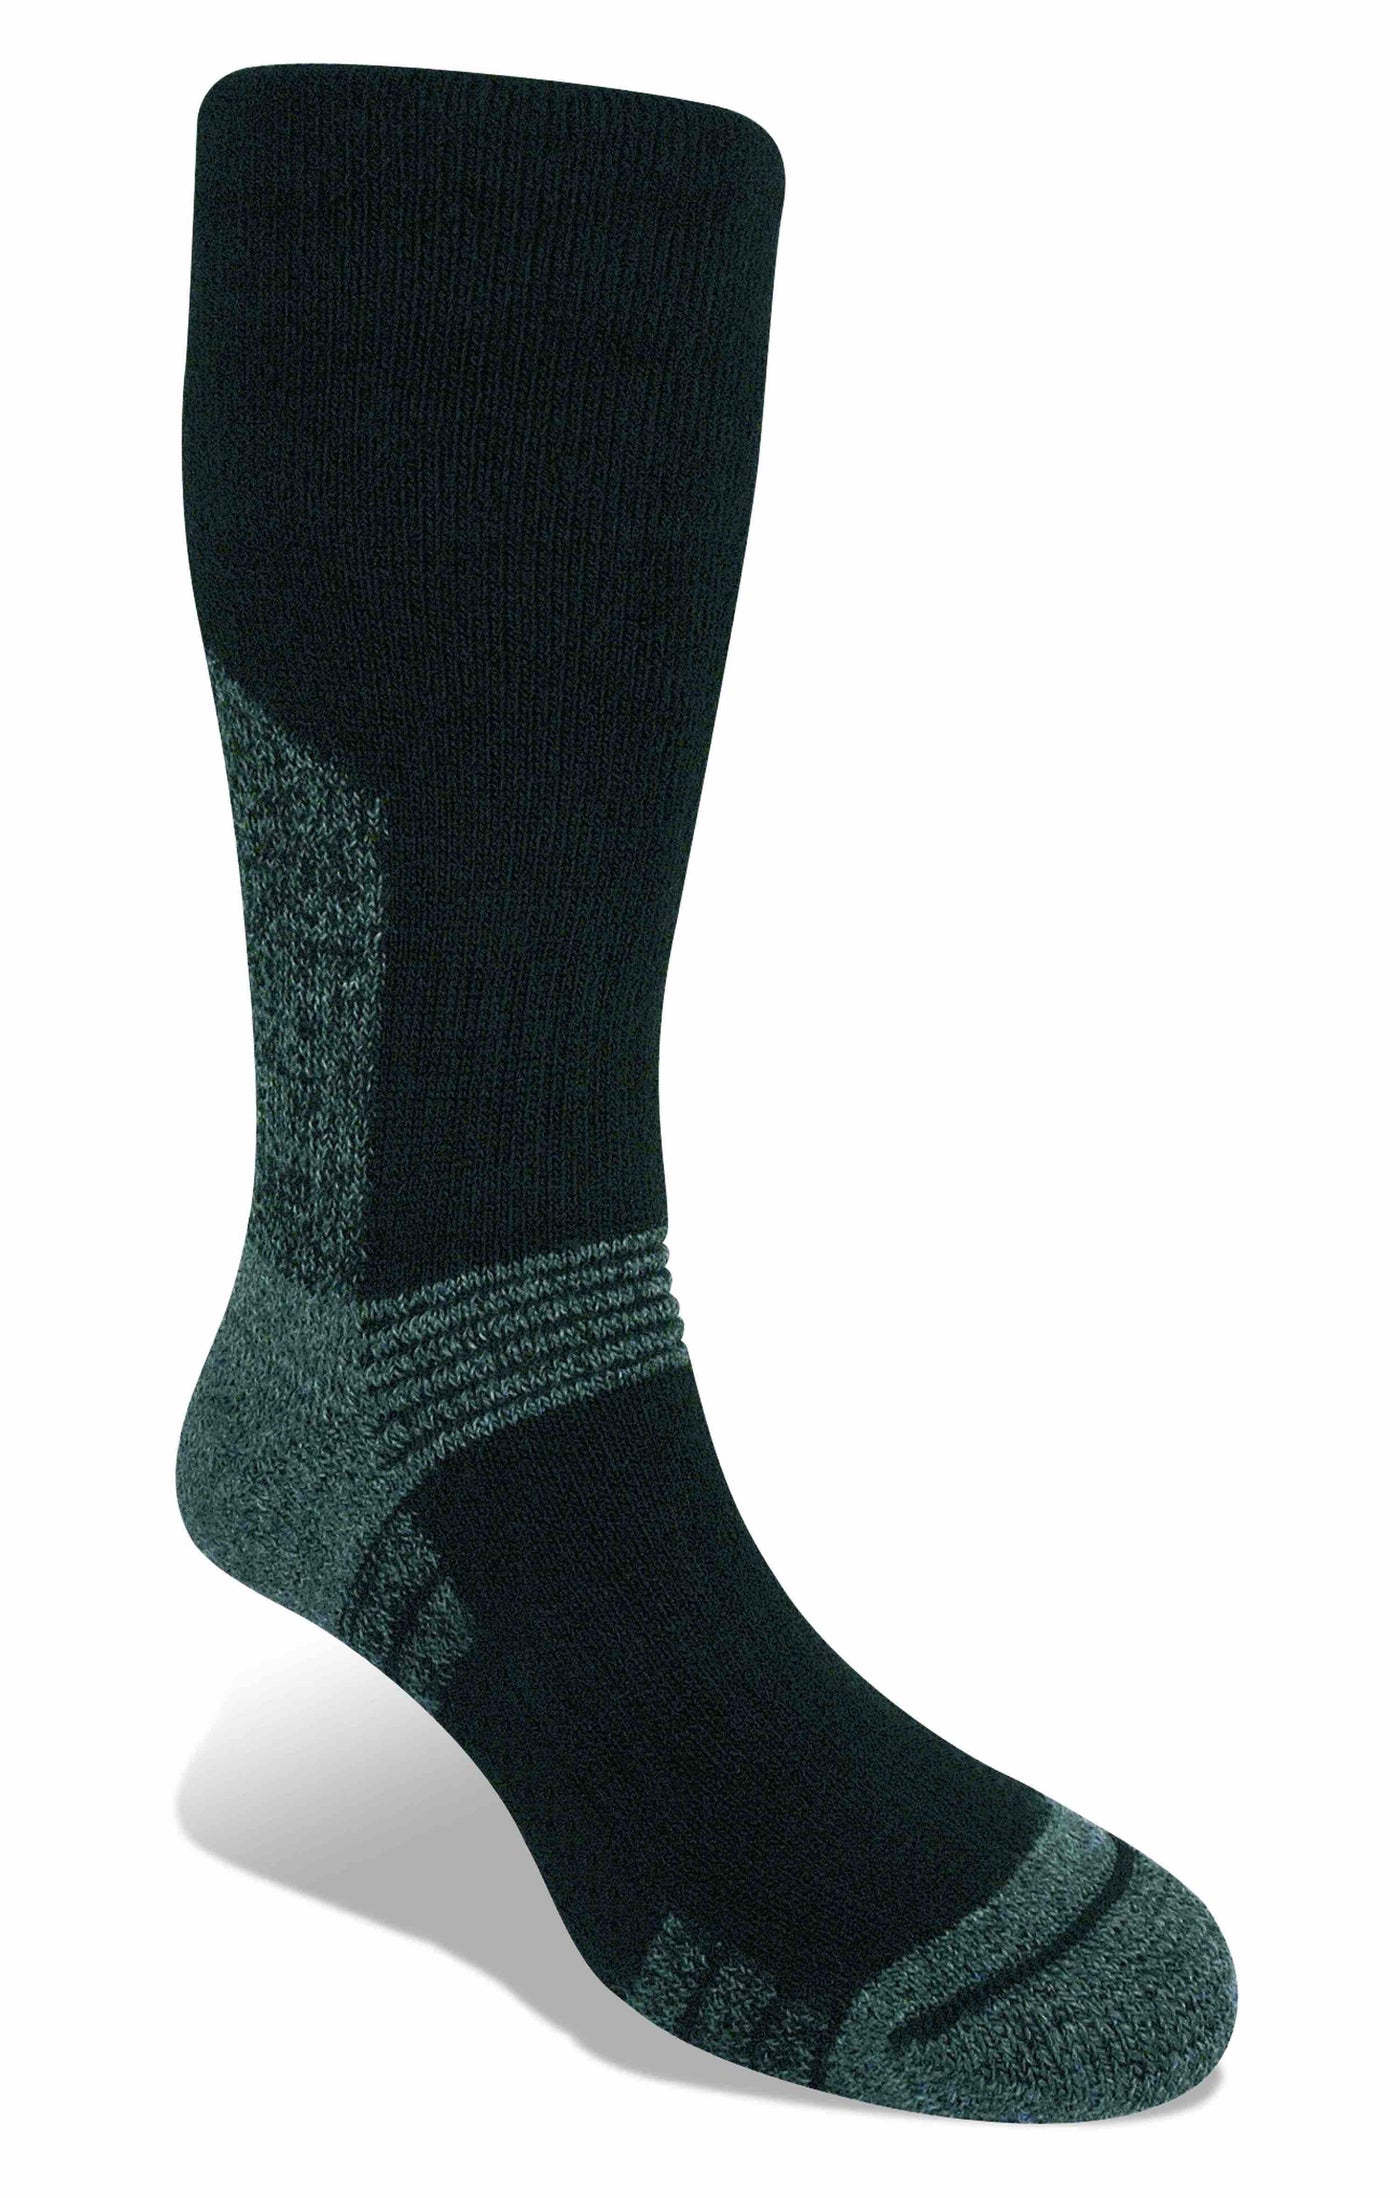 Bridgedale Explorer Heavyweight Socks